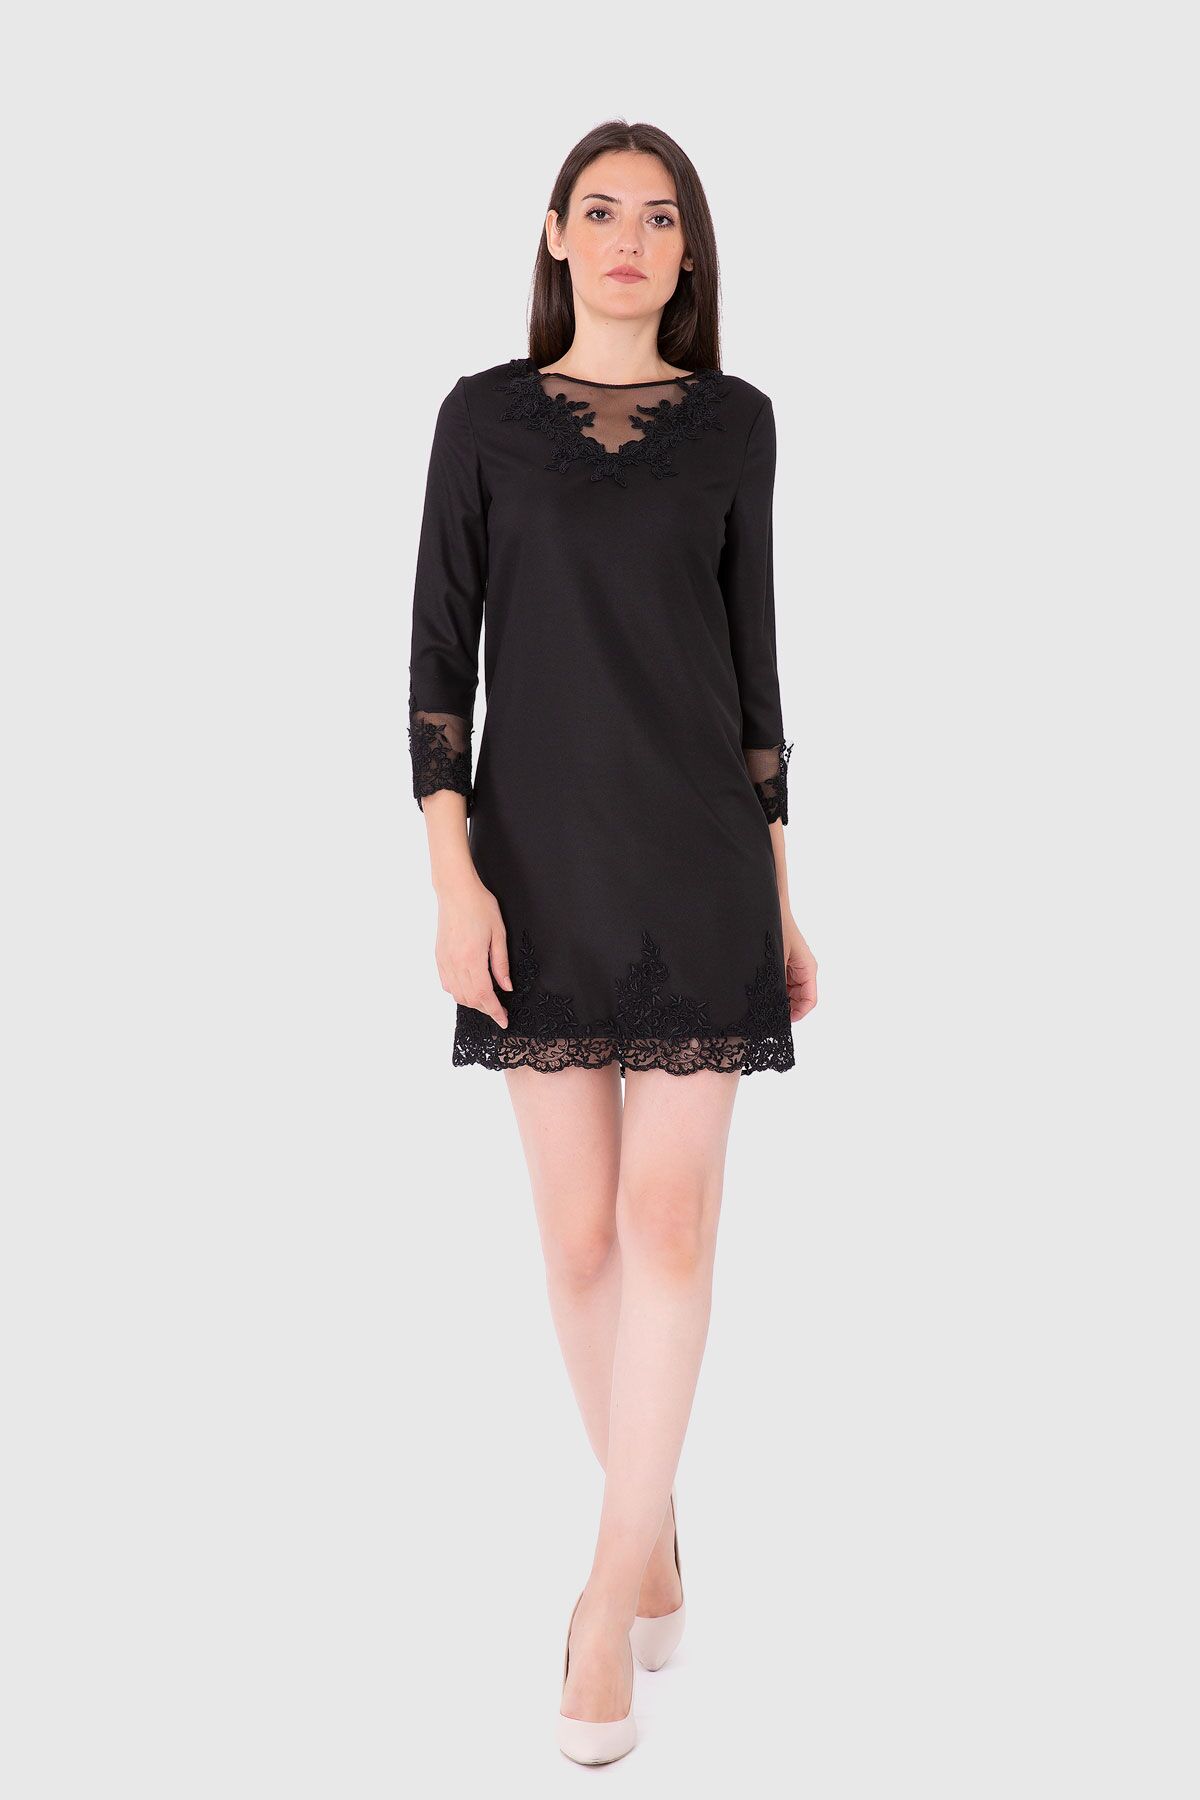 KIWE - Dantel İşlemeli Siyah Mini Elbise